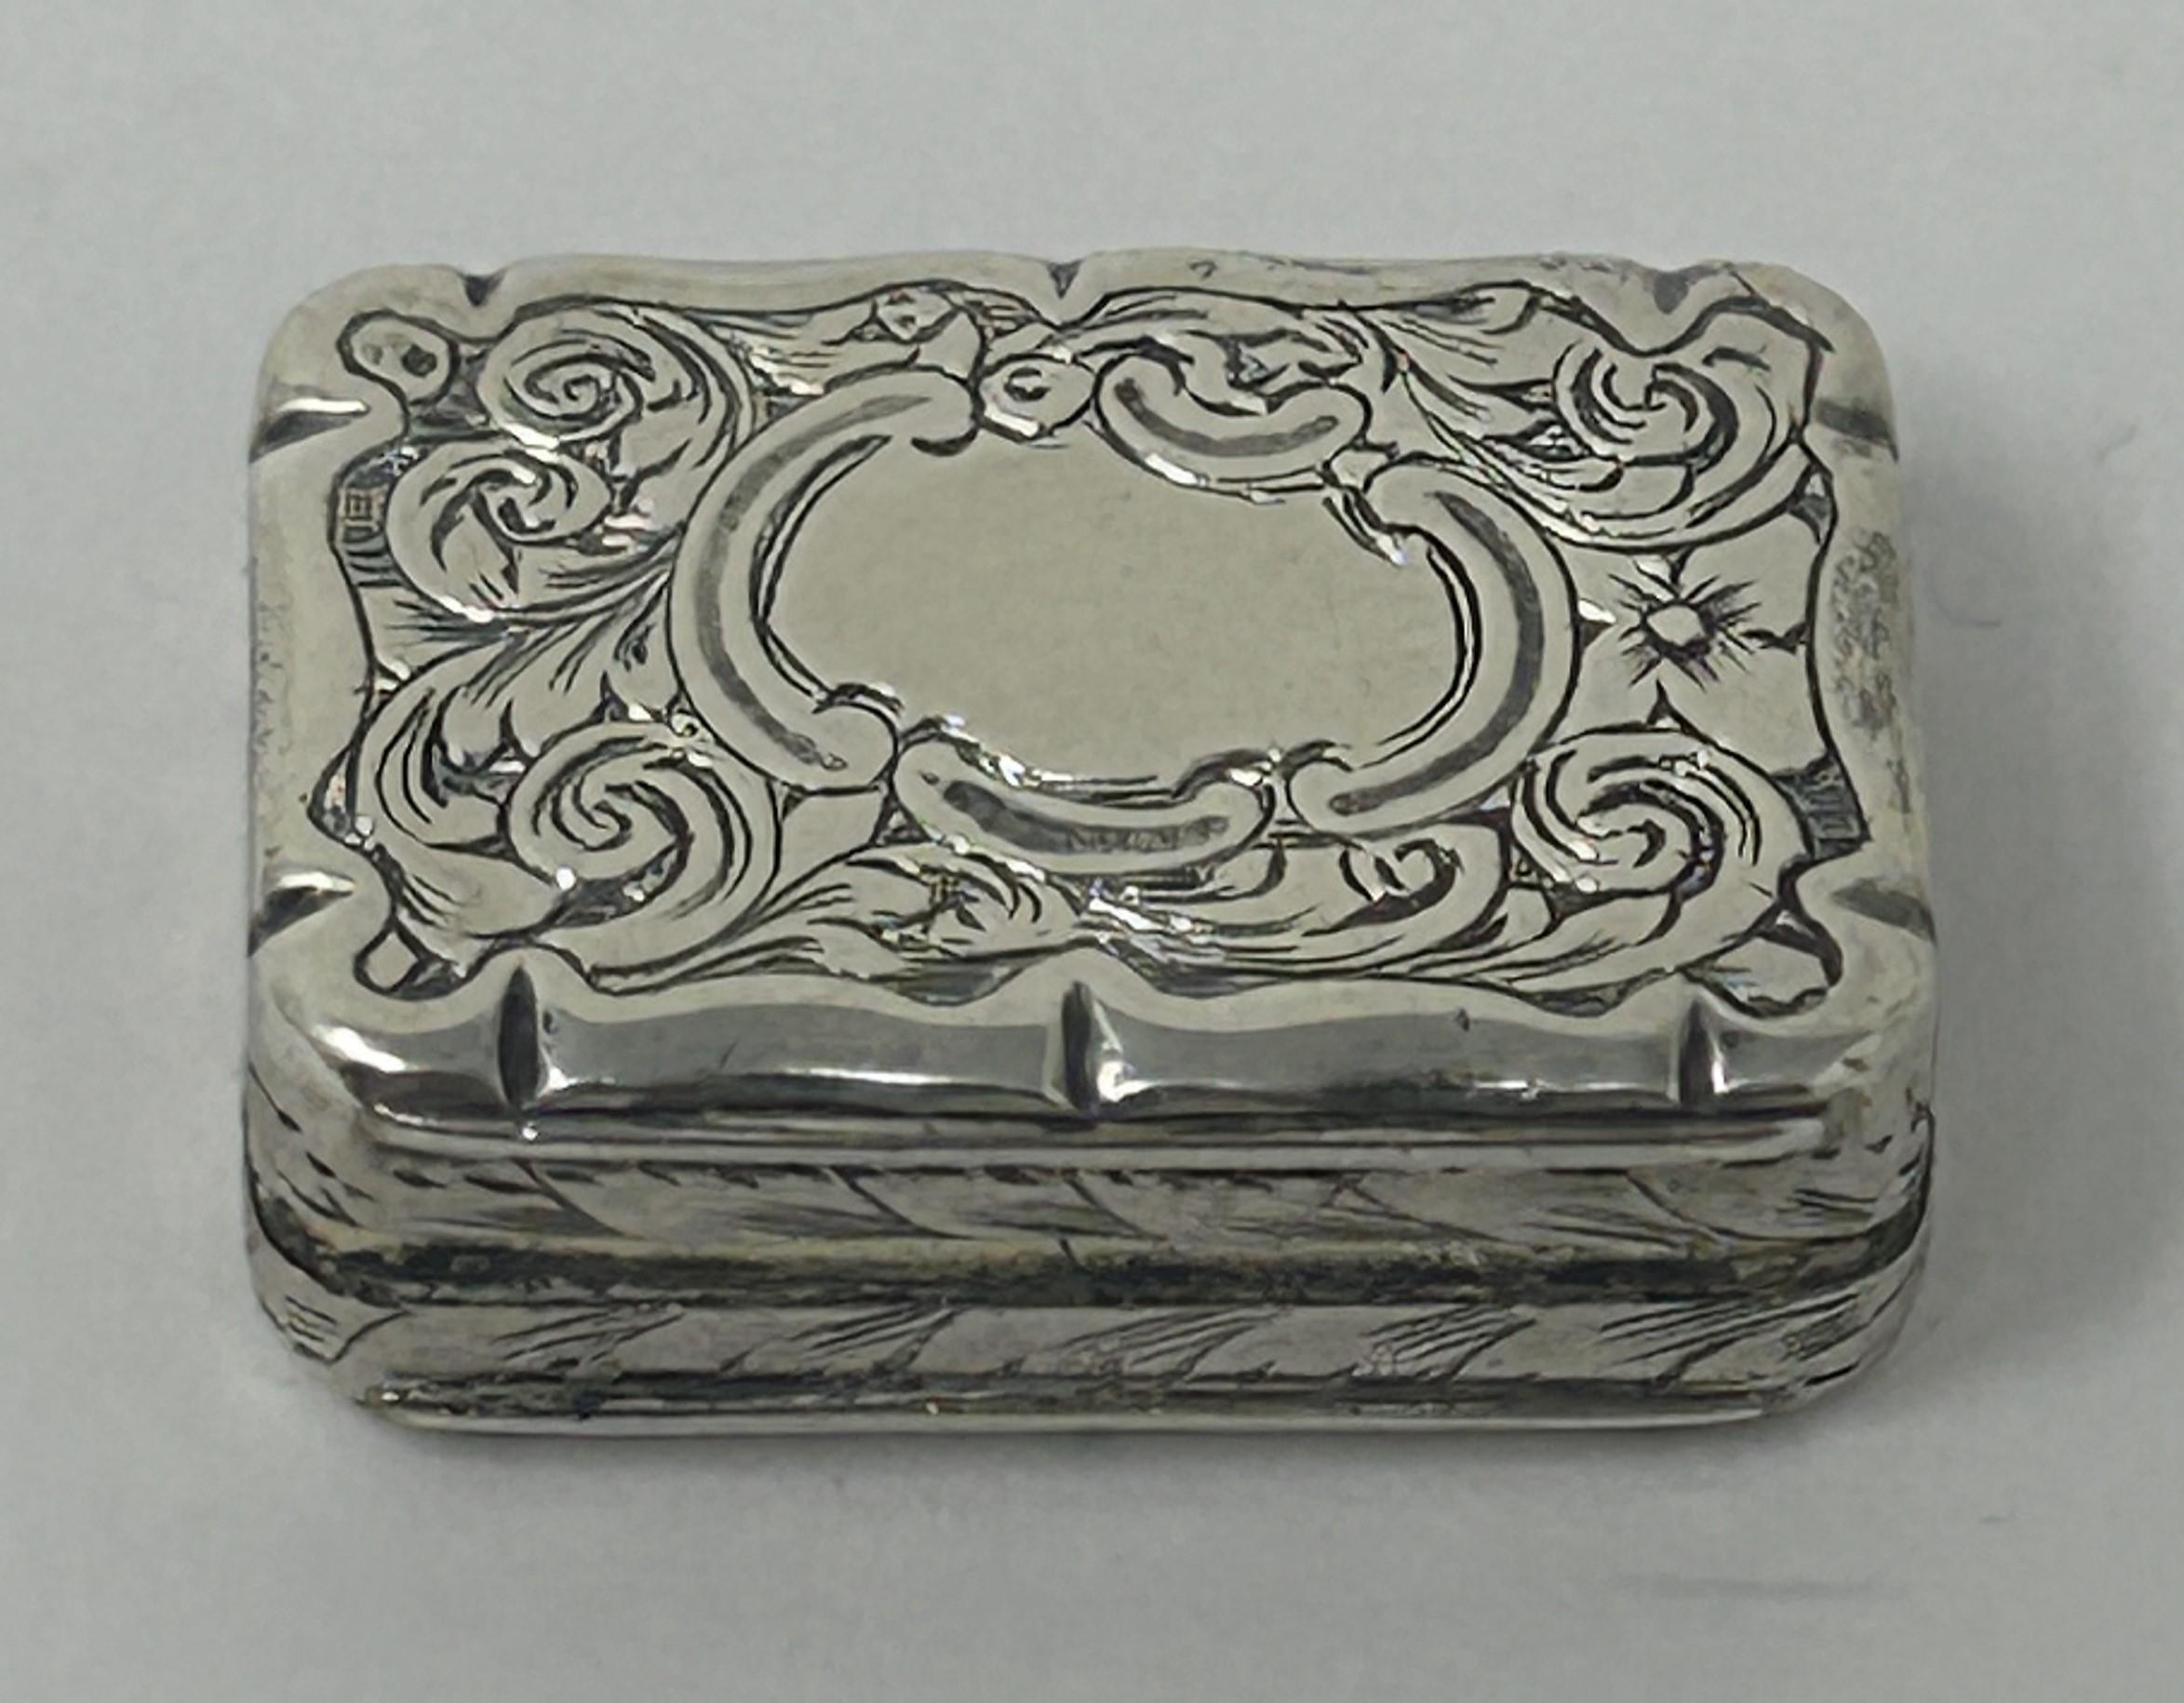 A 19th century silver vinaigrette, 6.2 g